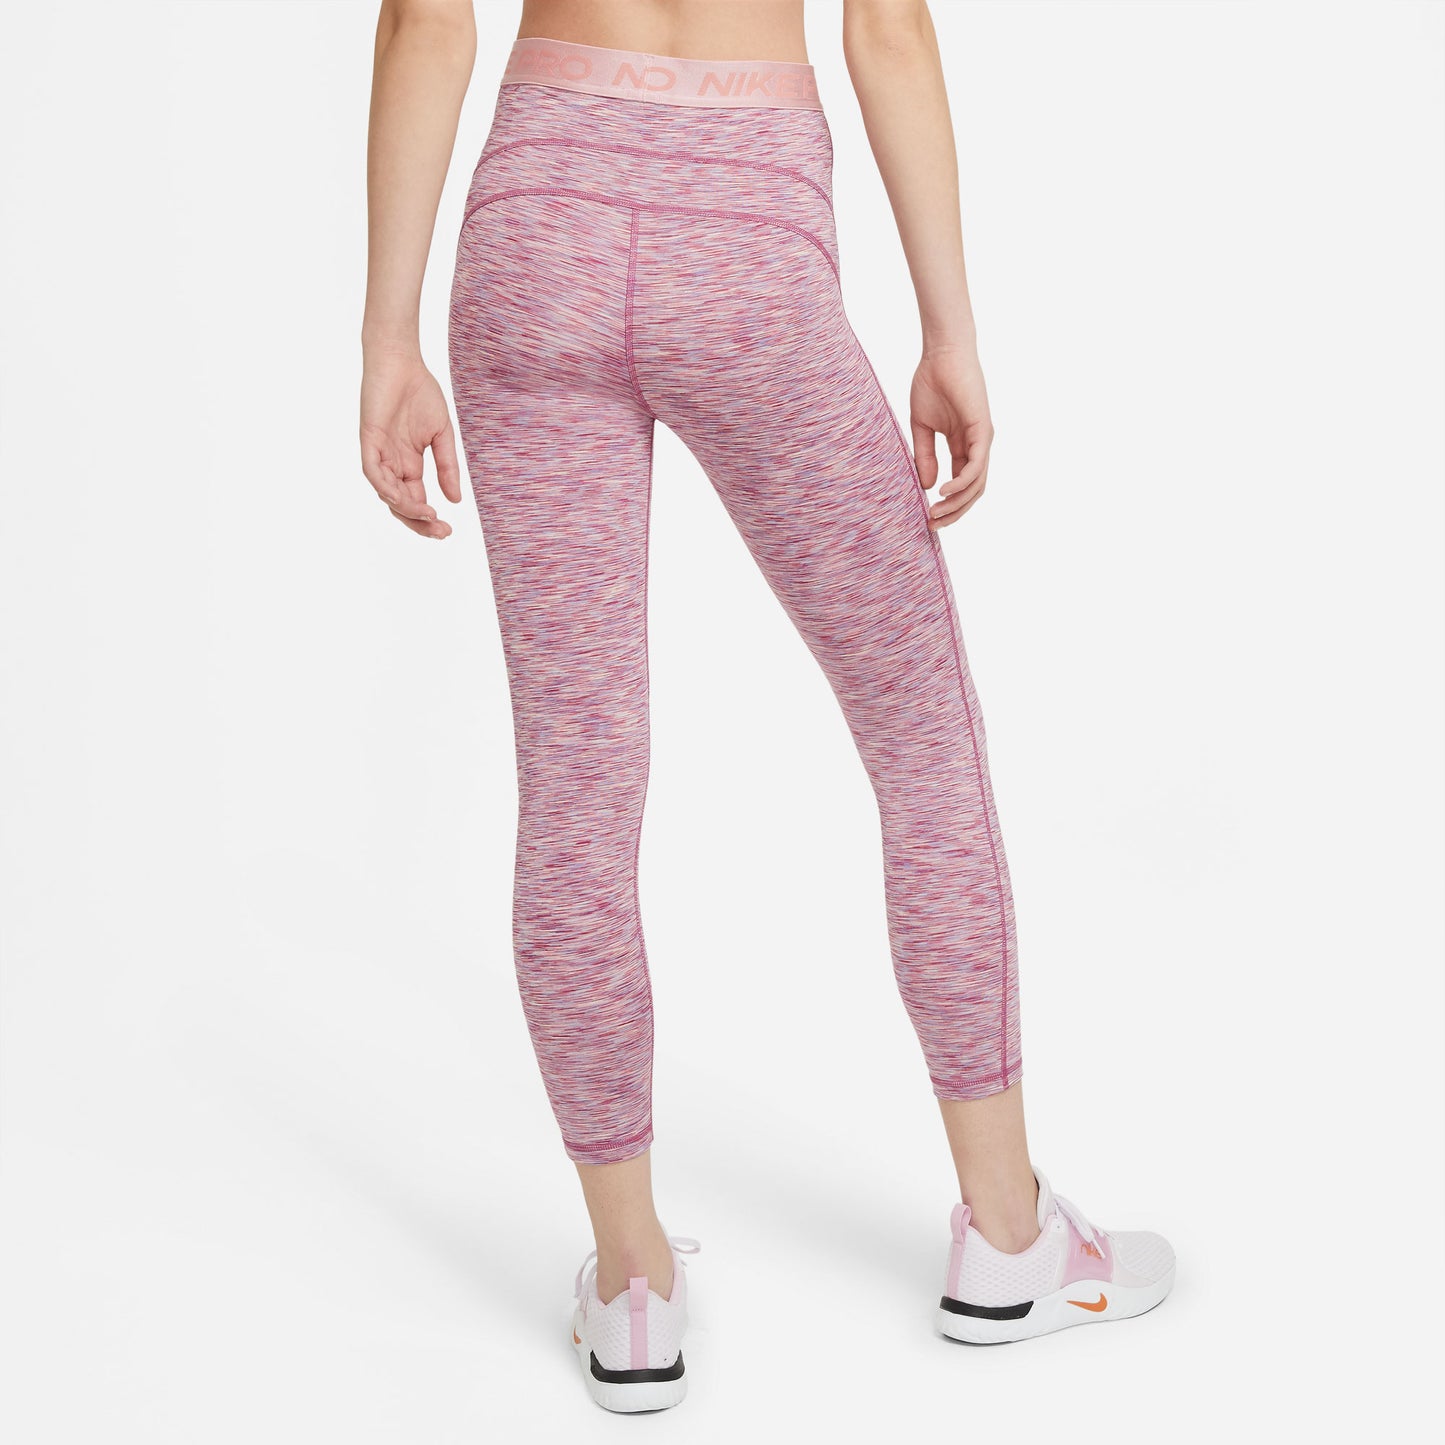 Nike Women's Cropped Space-Dye Tights Pink (2)